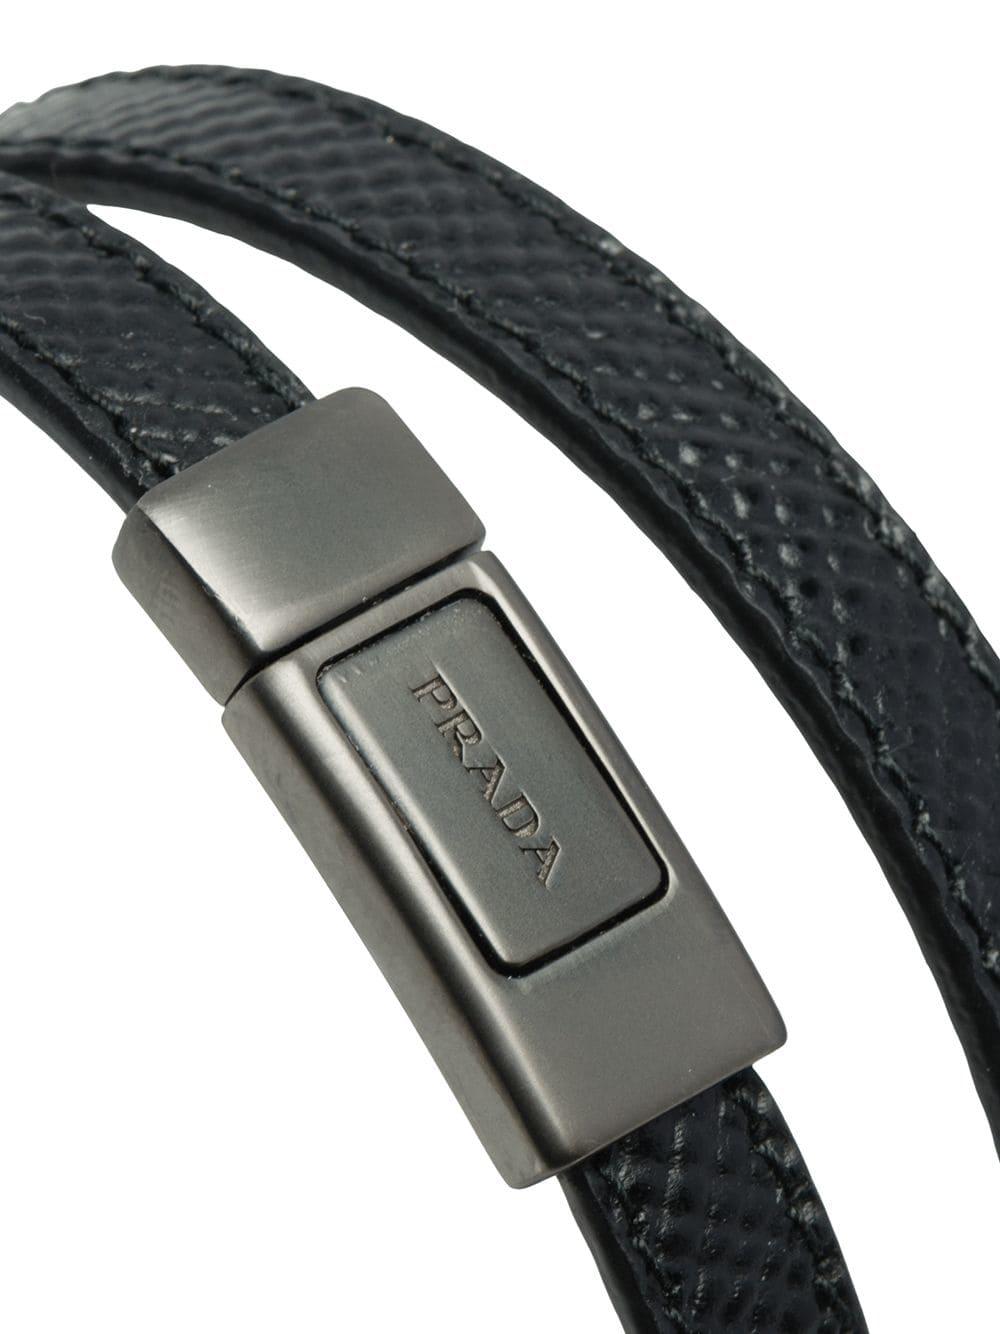 Prada Saffiano Leather Bracelet in Black for Men - Lyst